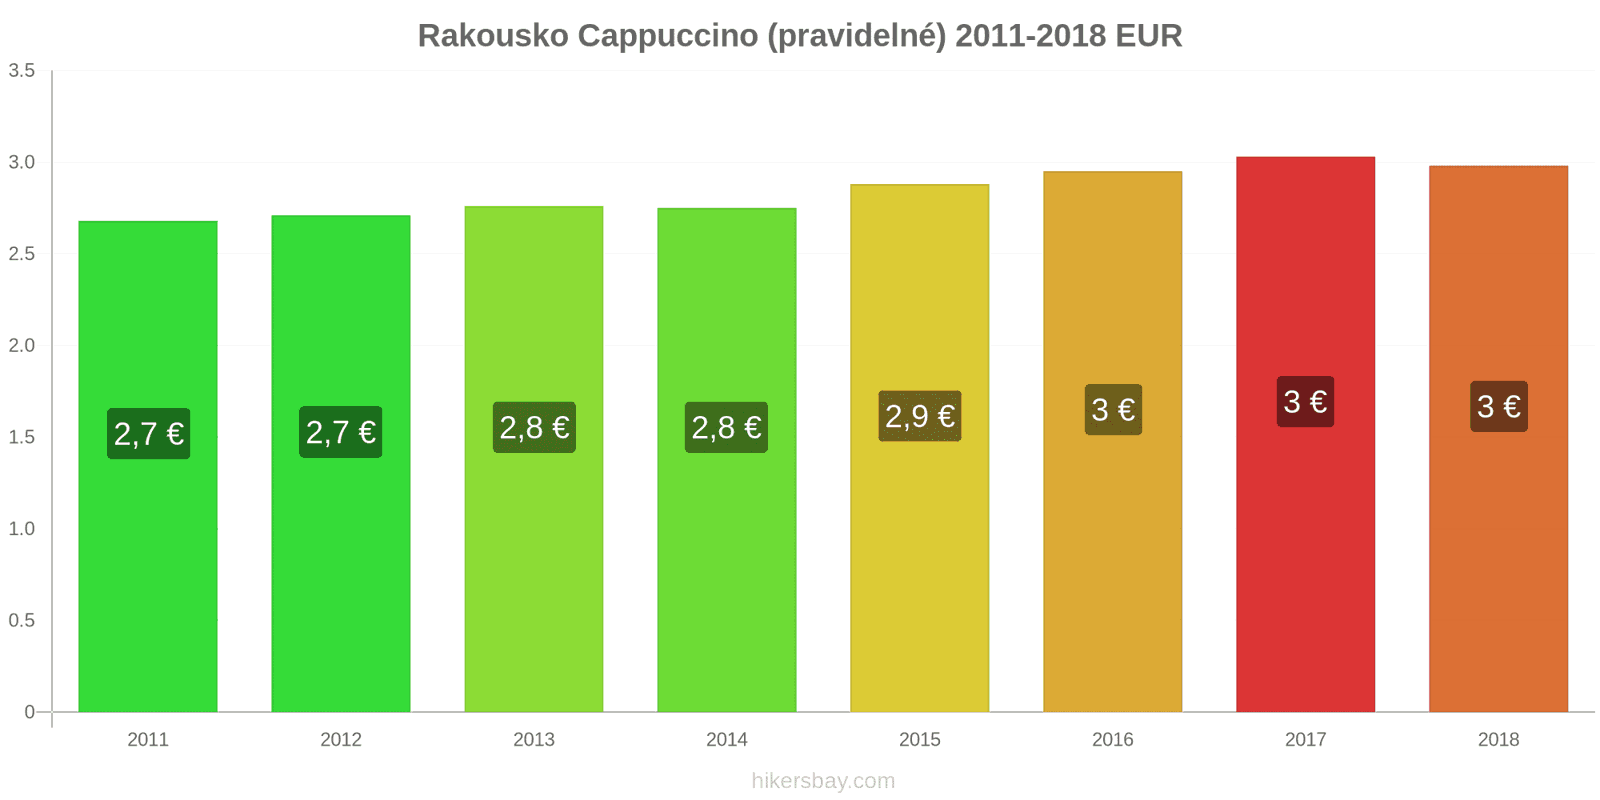 Rakousko změny cen Cappuccino hikersbay.com